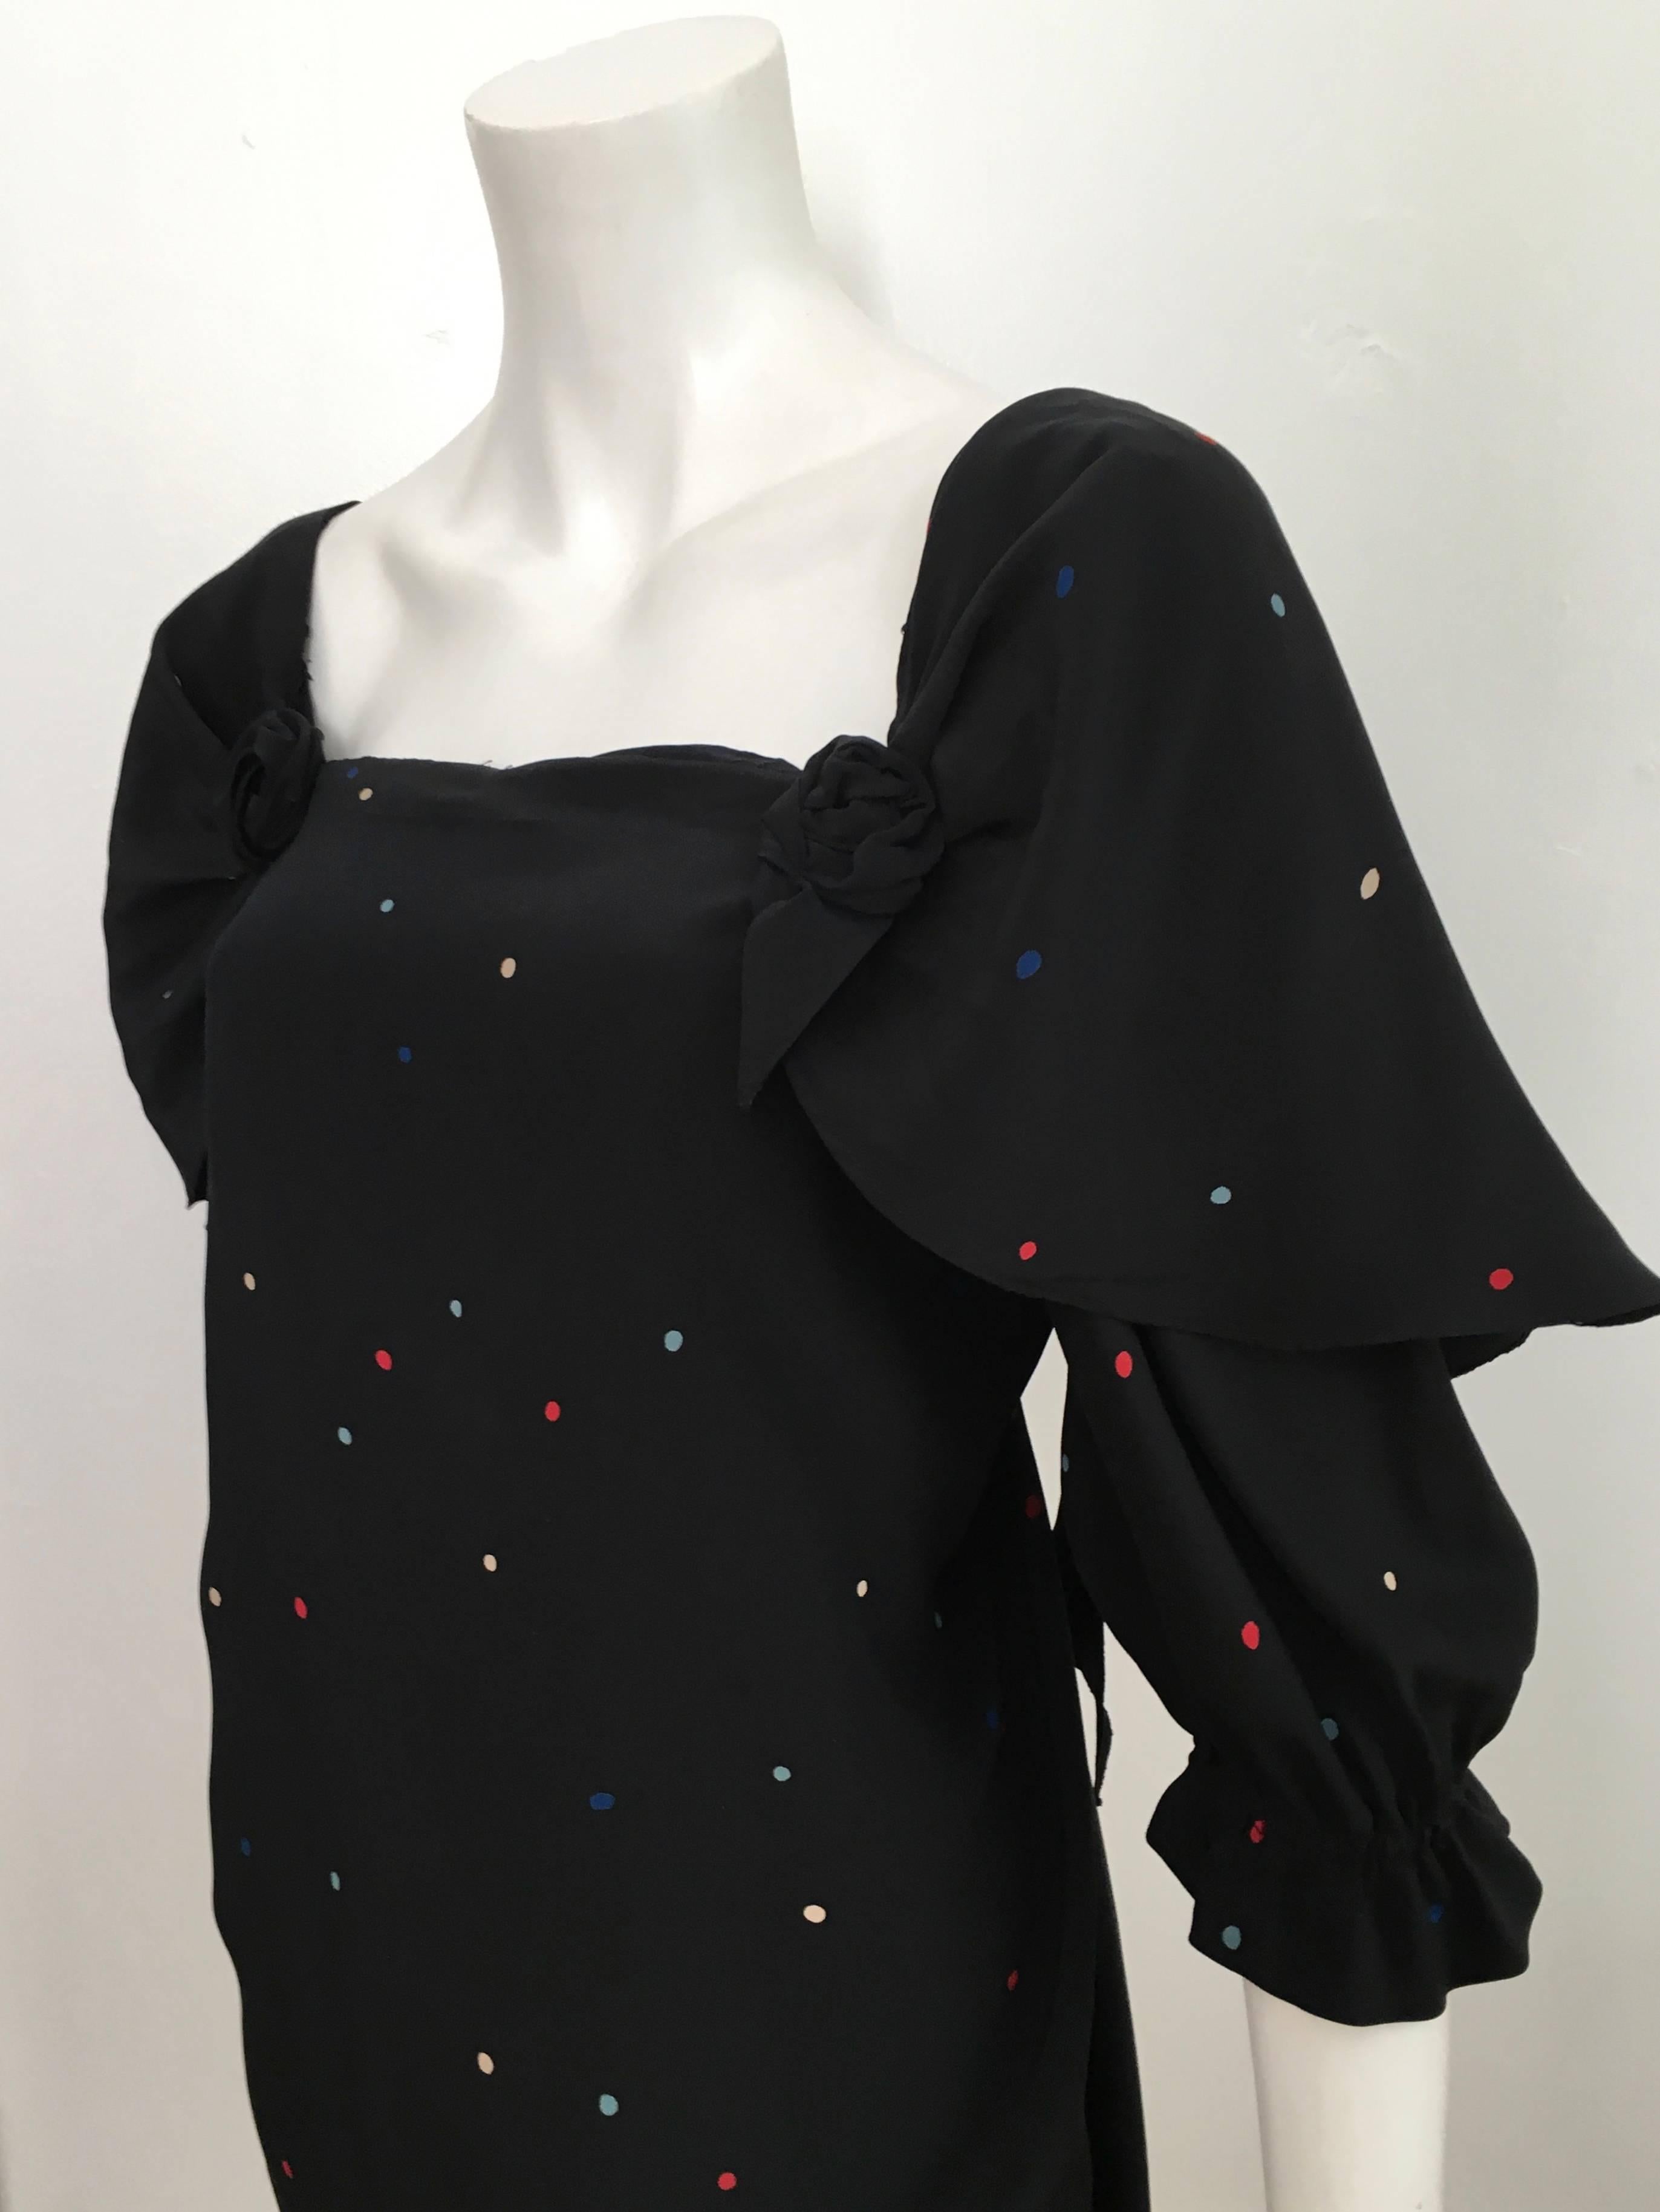 Halston 1970s Black Silk Polka Dot Dress Size 6 / 8. 3